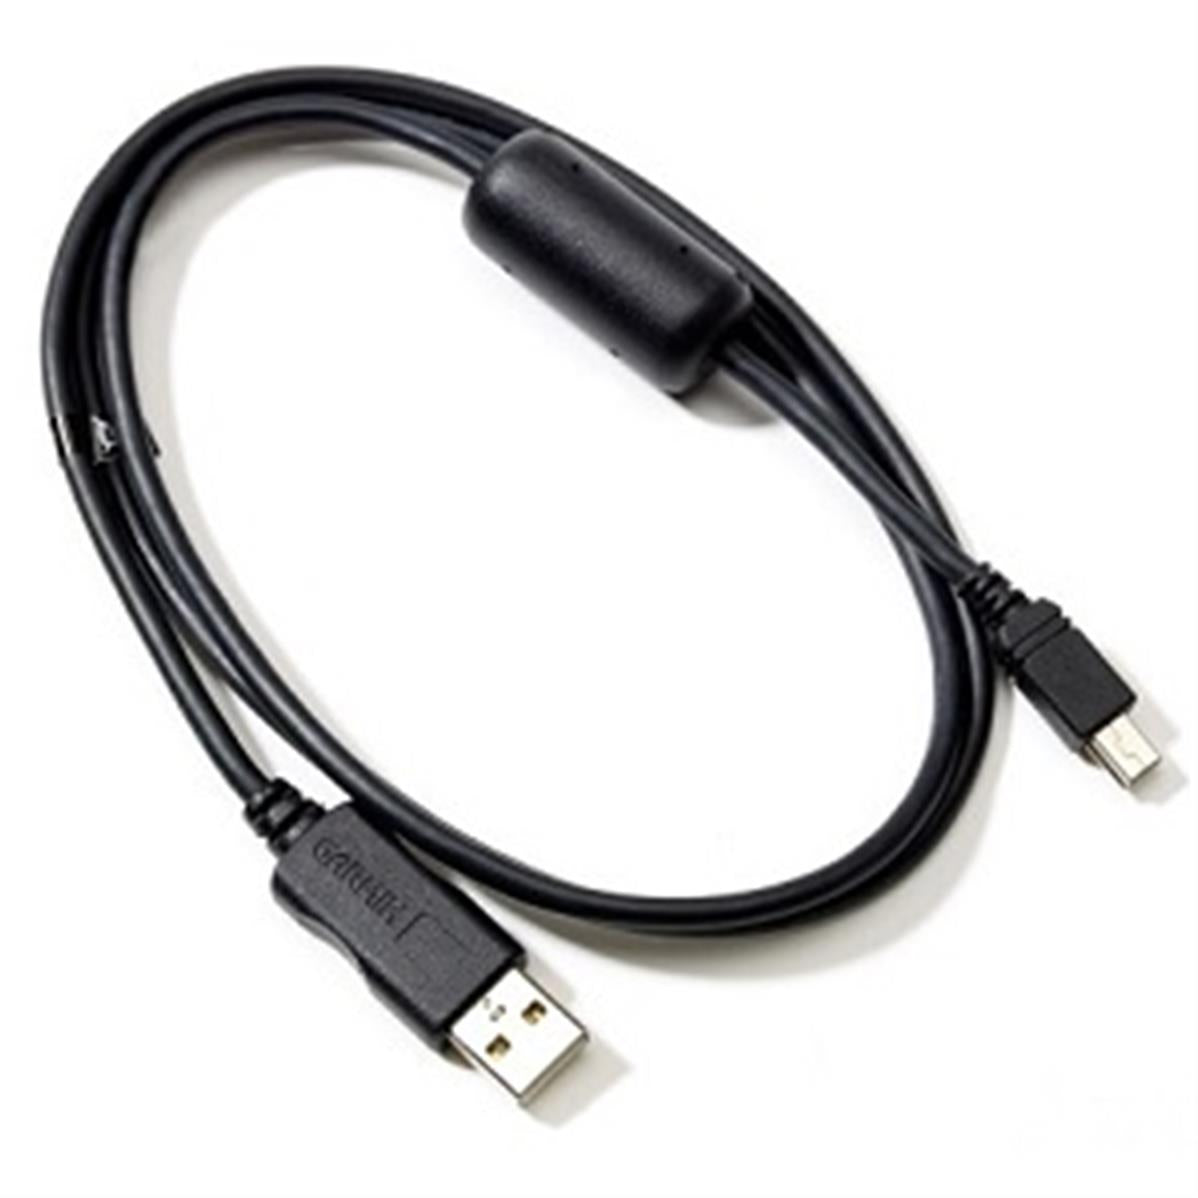 USB кабель для Garmin 64st. USB кабель для Garmin Touch 25. Garmin шнур HDMI. Кабель для навигатора Гармин 64st. Кабель гармин